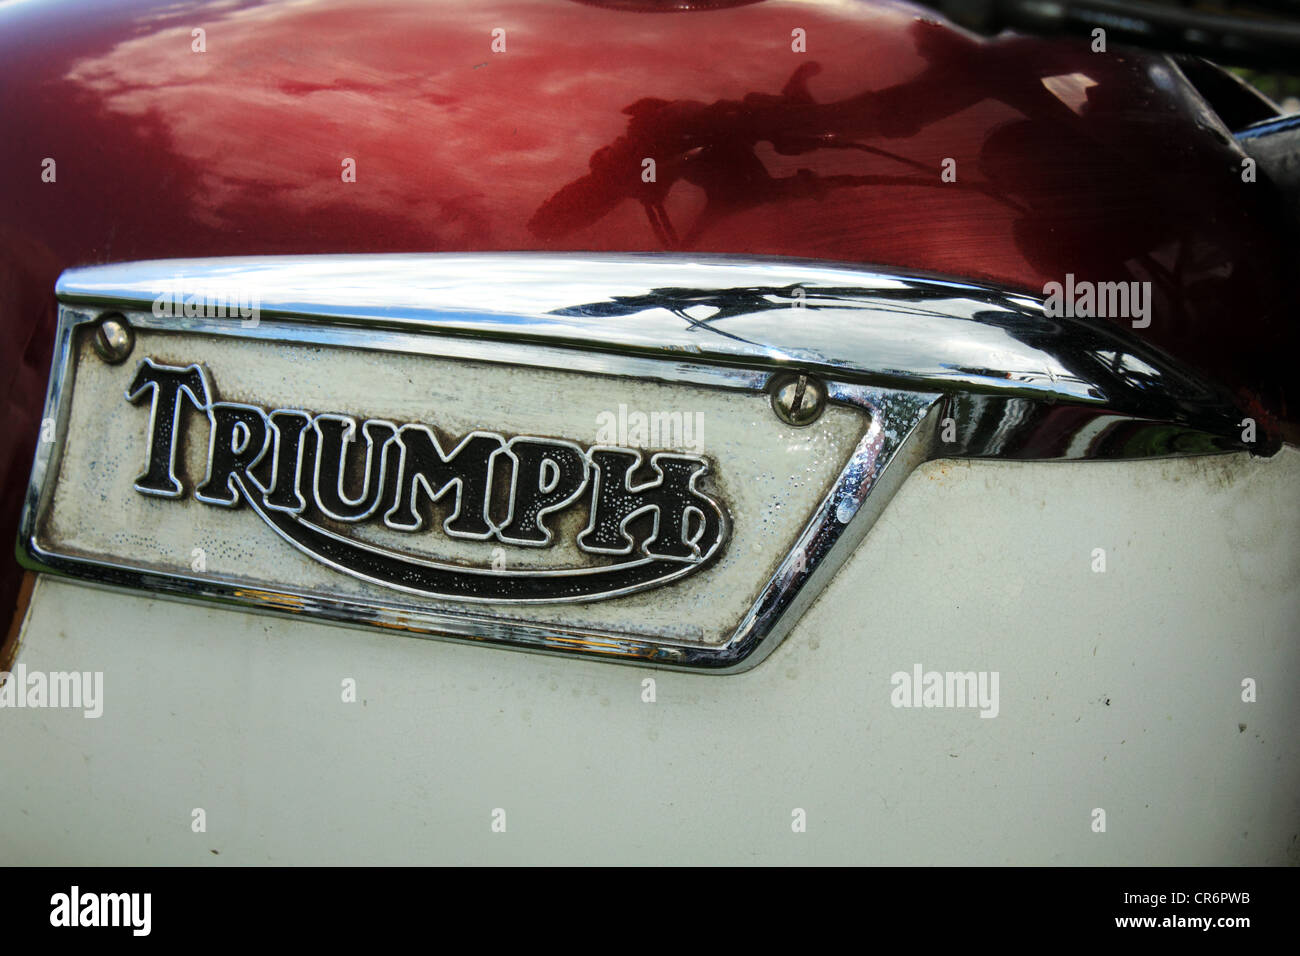 Triumph Motorcycle Stock Photo